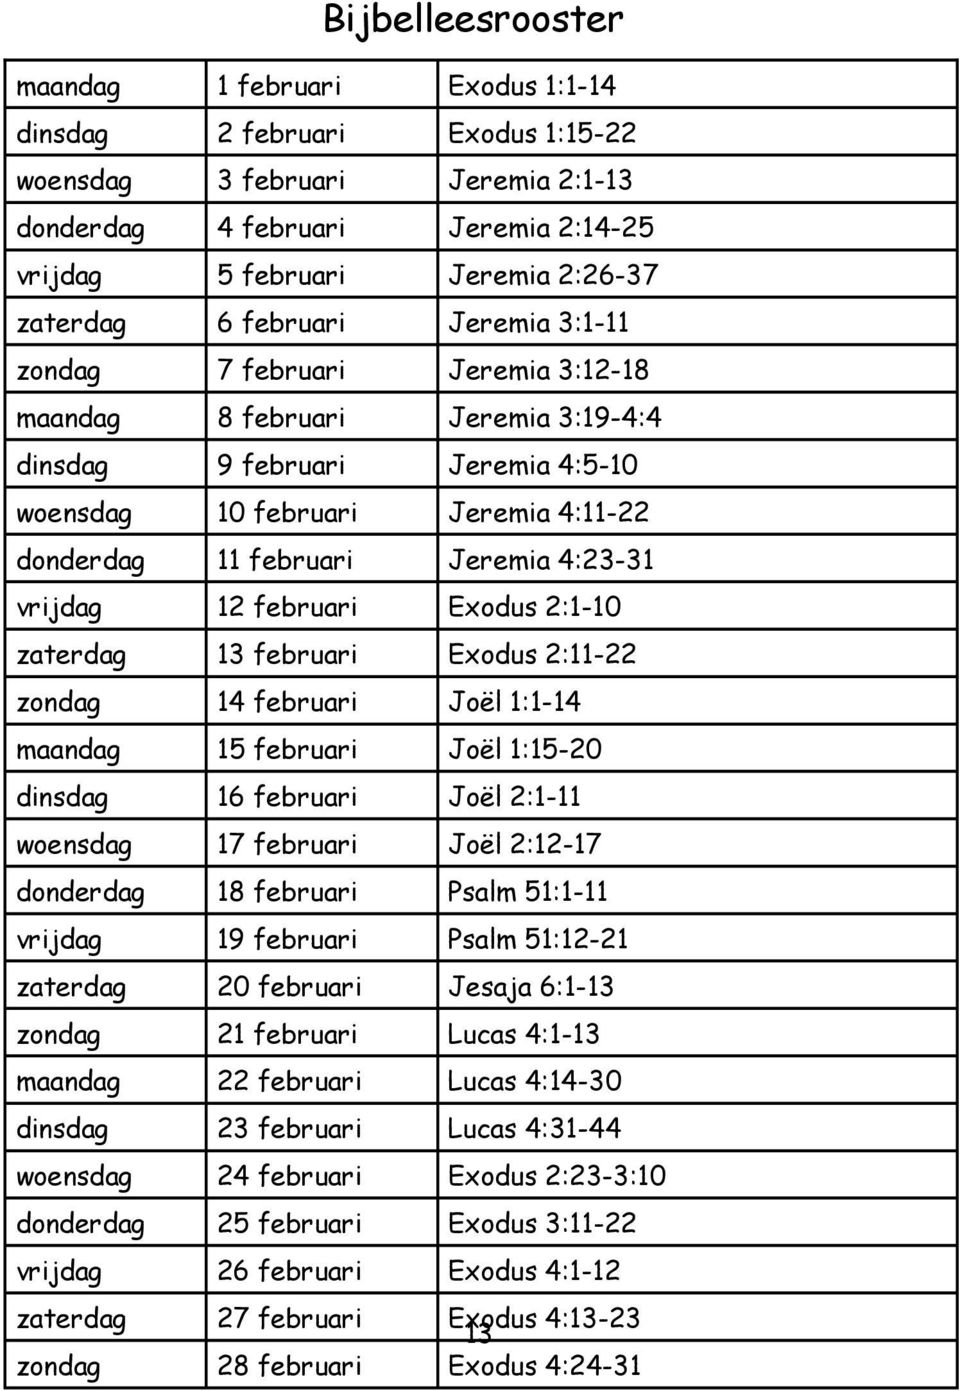 Jeremia 4:23-31 vrijdag 12 februari Exodus 2:1-10 zaterdag 13 februari Exodus 2:11-22 zondag 14 februari Joël 1:1-14 maandag 15 februari Joël 1:15-20 dinsdag 16 februari Joël 2:1-11 woensdag 17